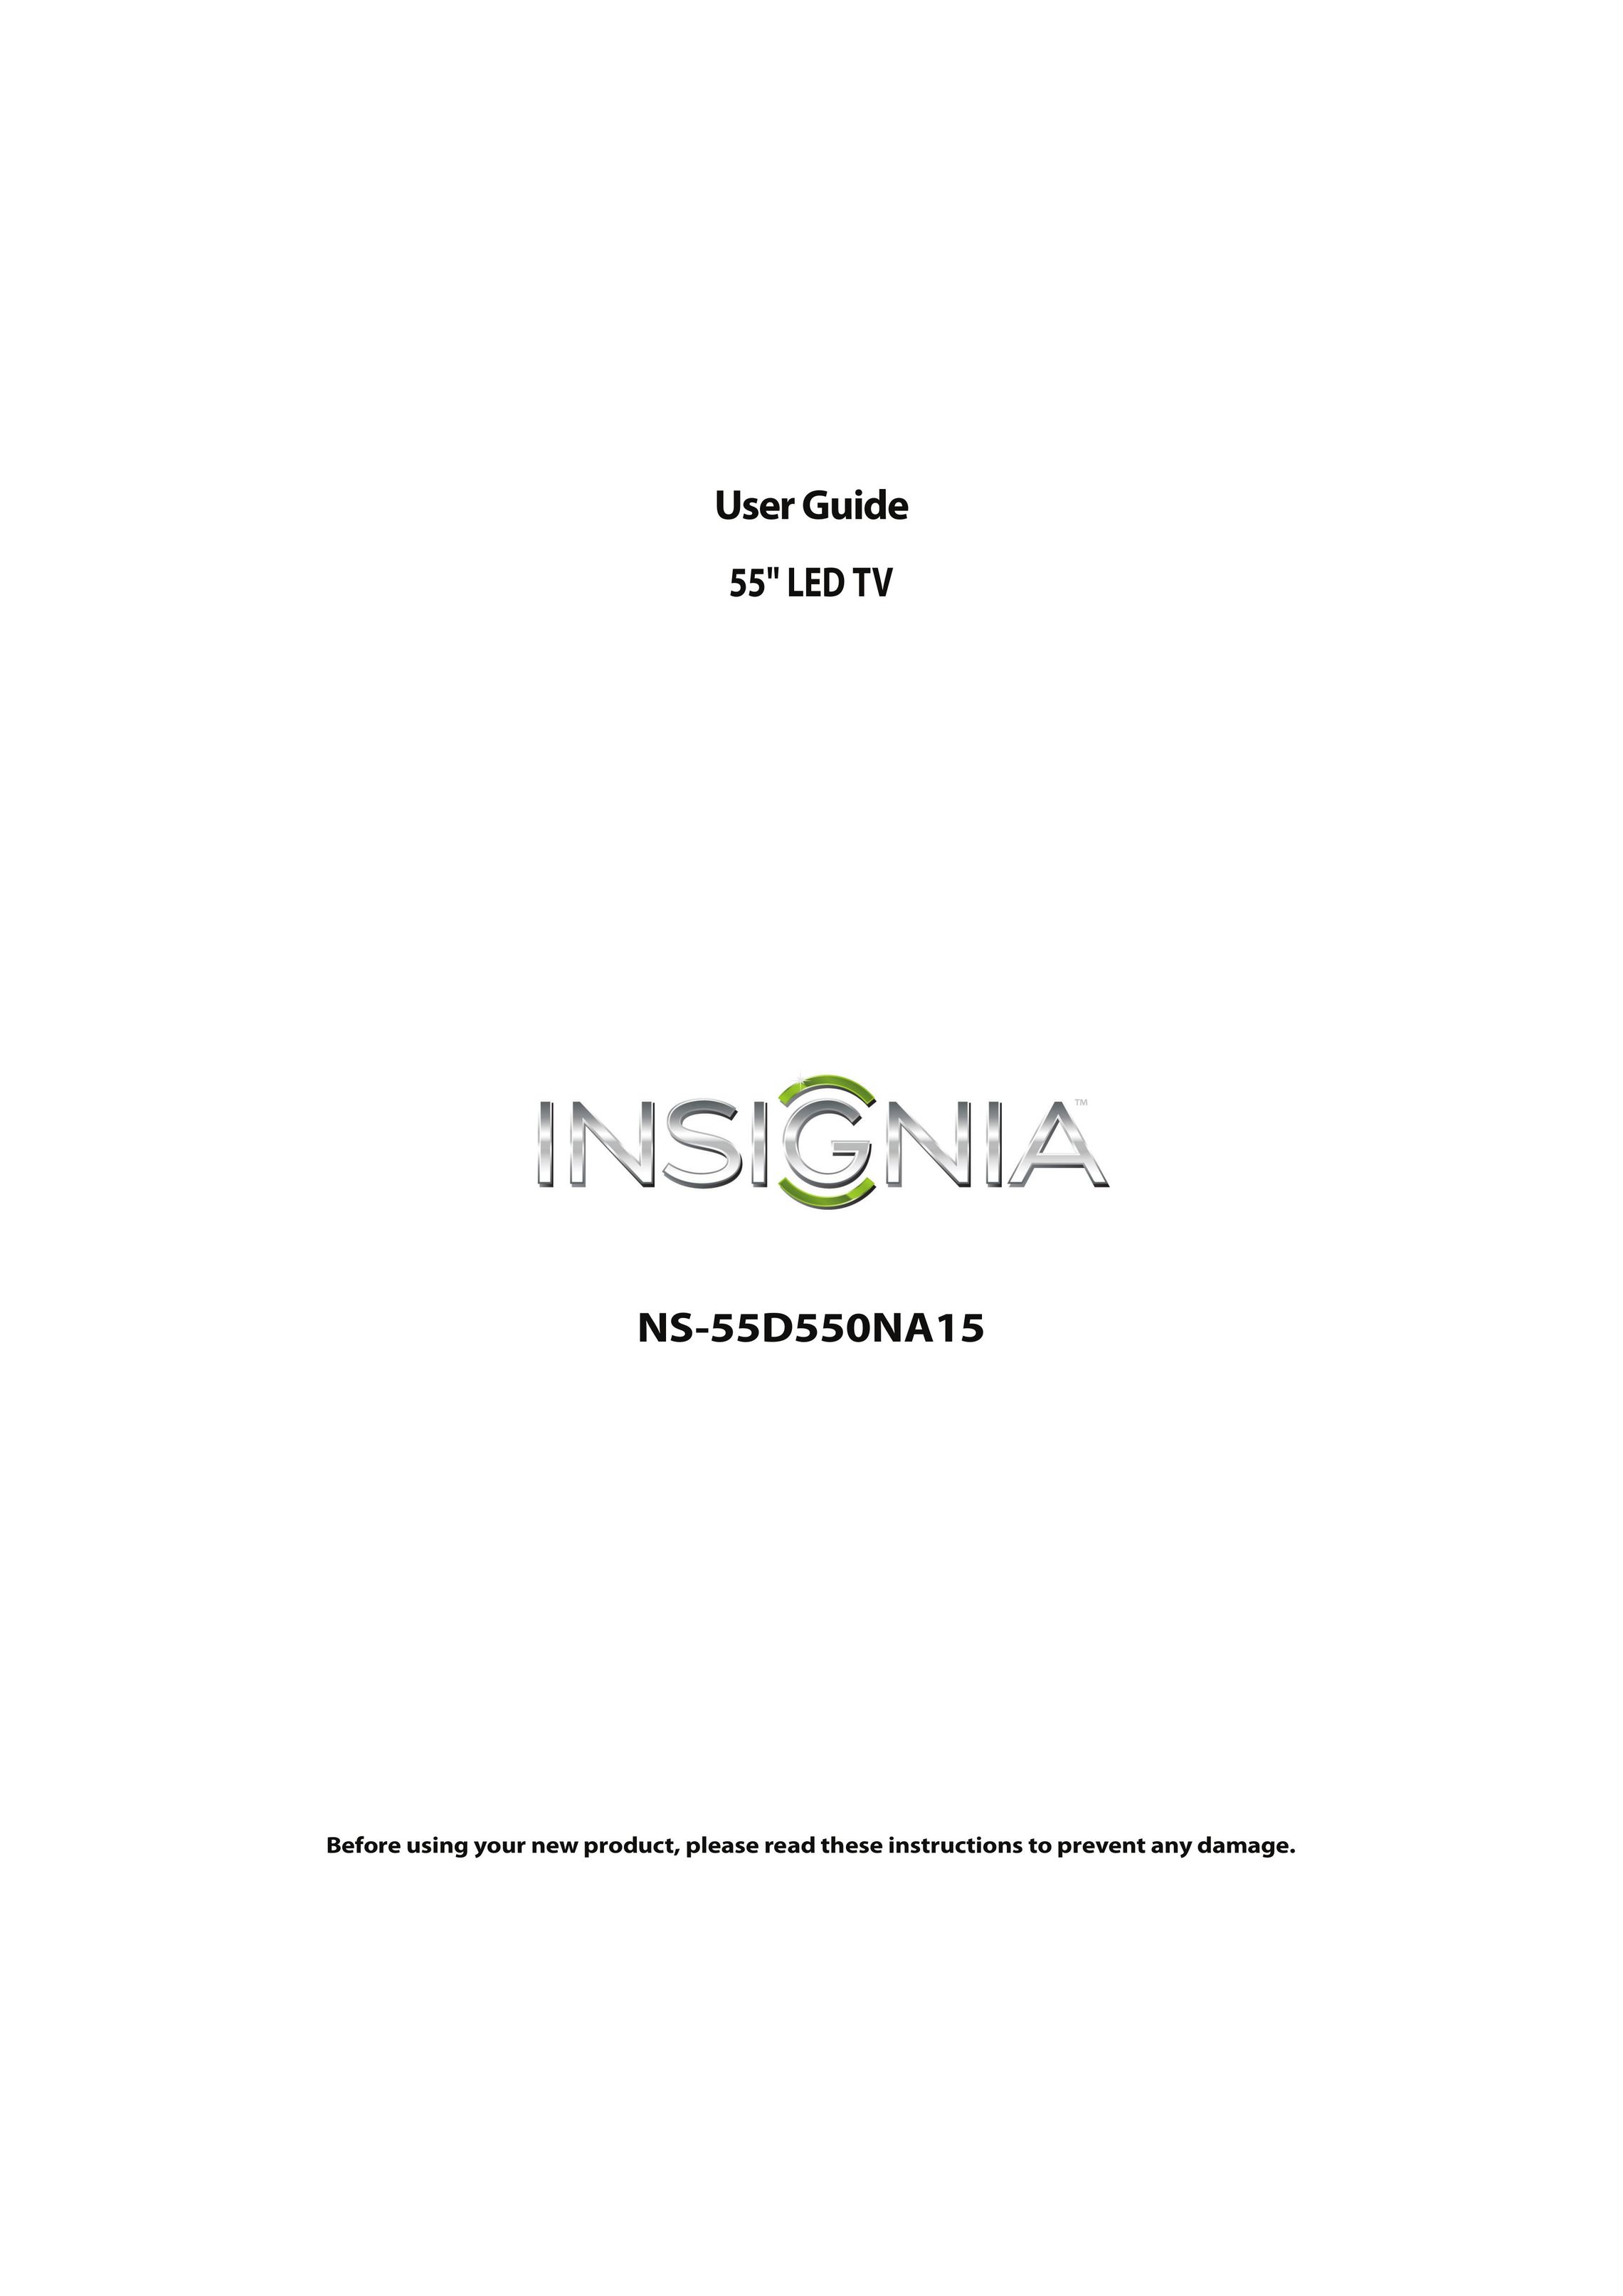 Insignia NS-55D550NA15 Car Satellite TV System User Manual